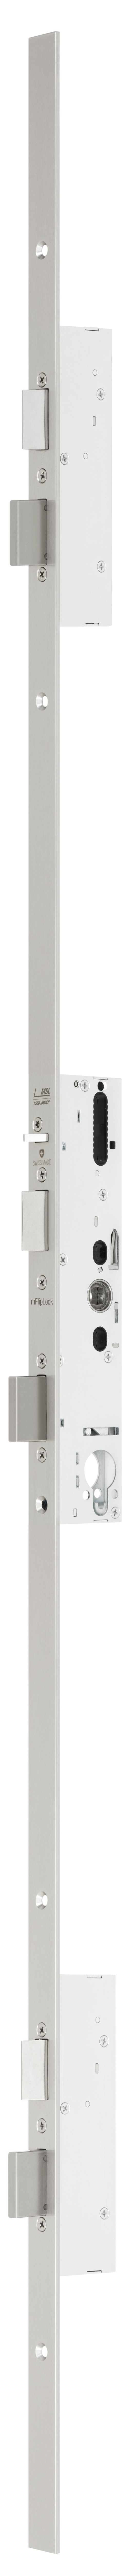 mFlipLock security multi-point locking system 24421